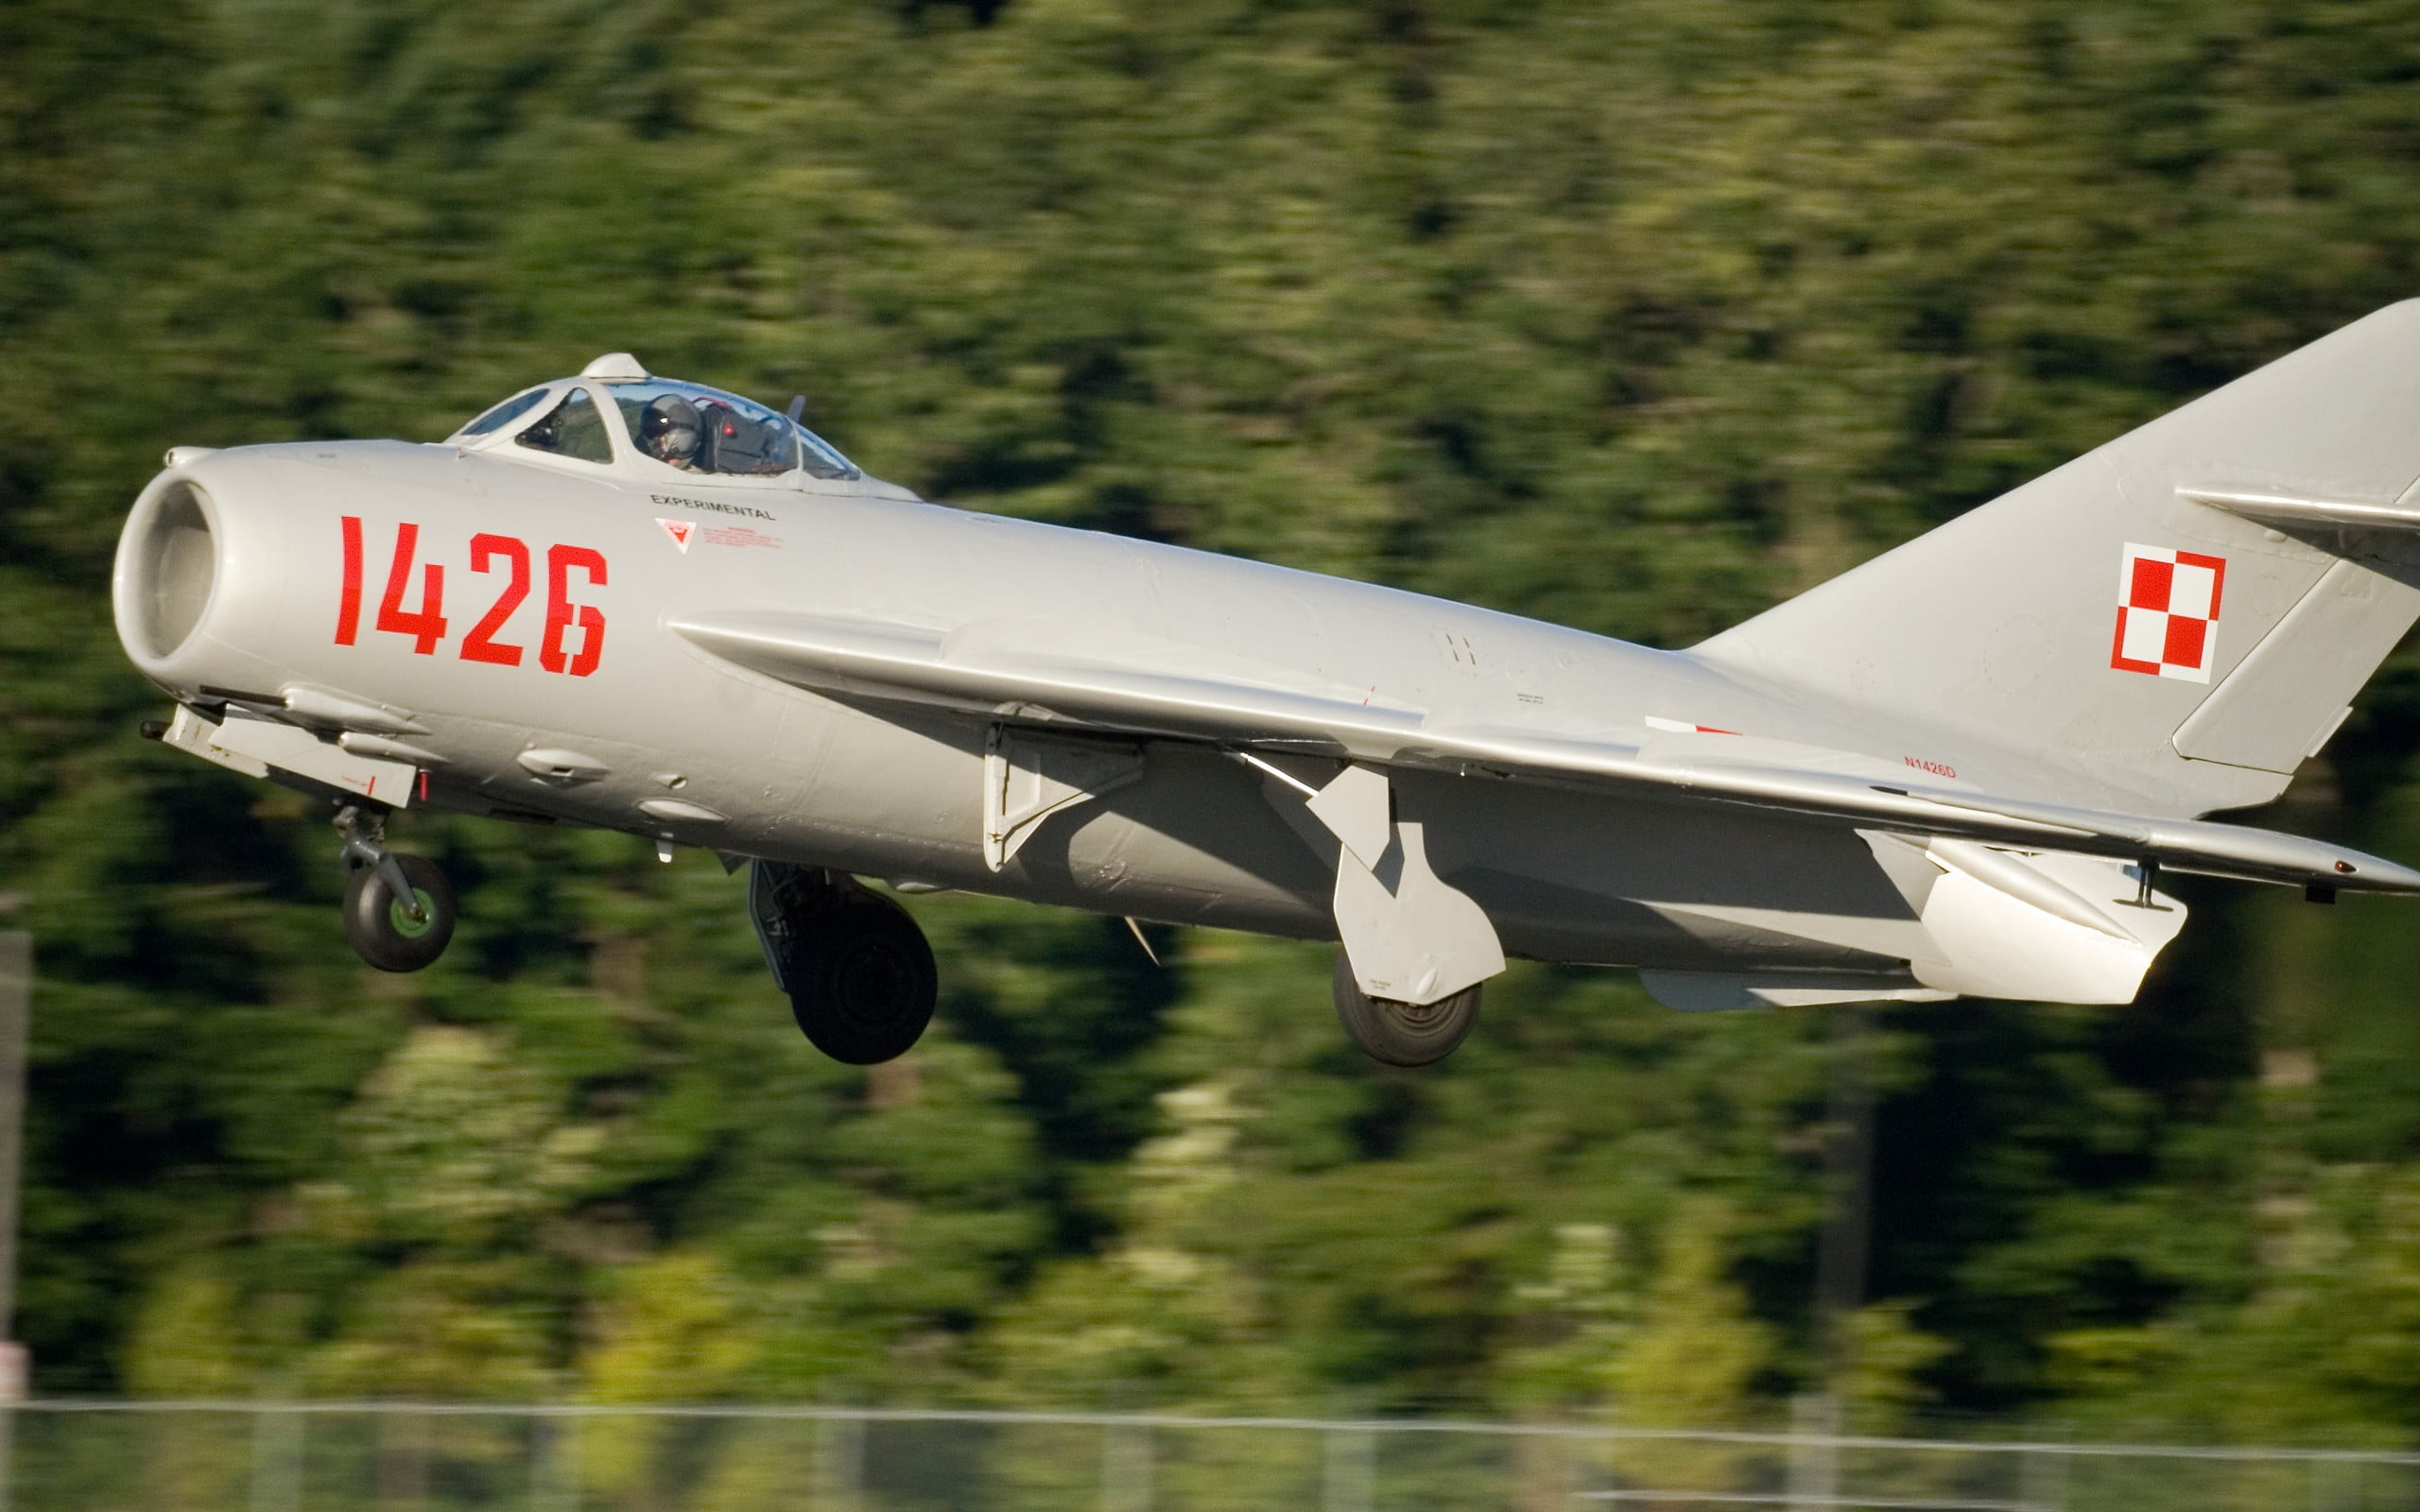 grey 1426 fighter plane, aircraft, military, airplane, war, Mikoyan